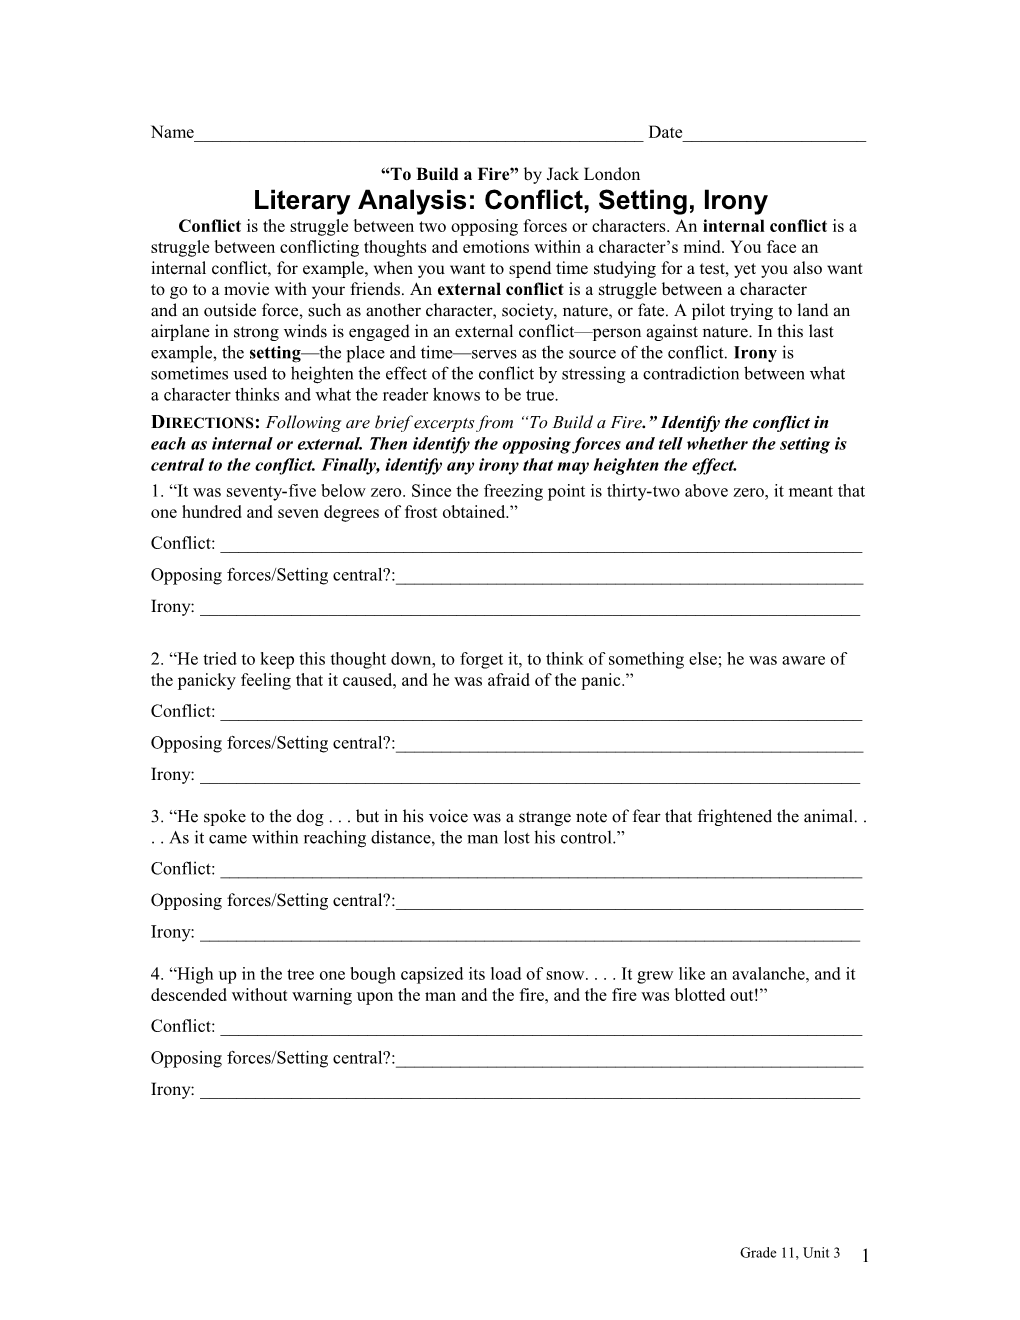 Literary Analysis: Conflict, Setting, Irony